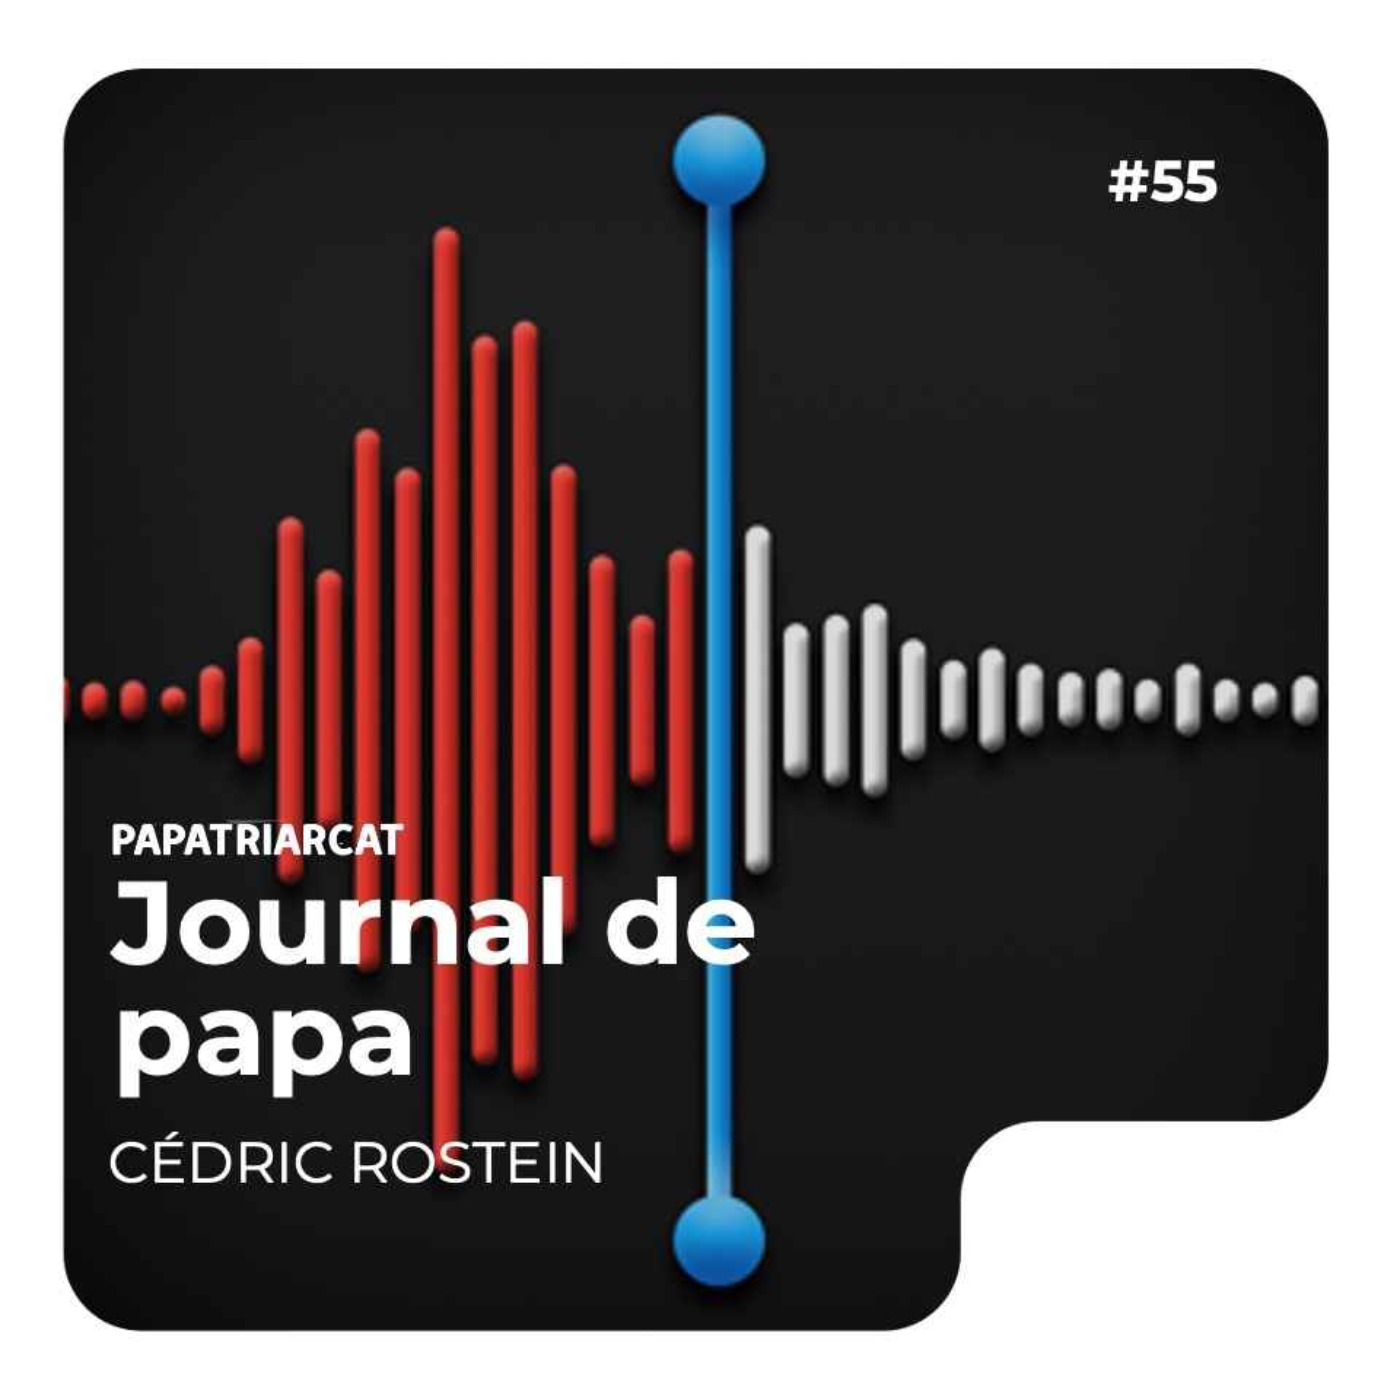 Journal de papa #55